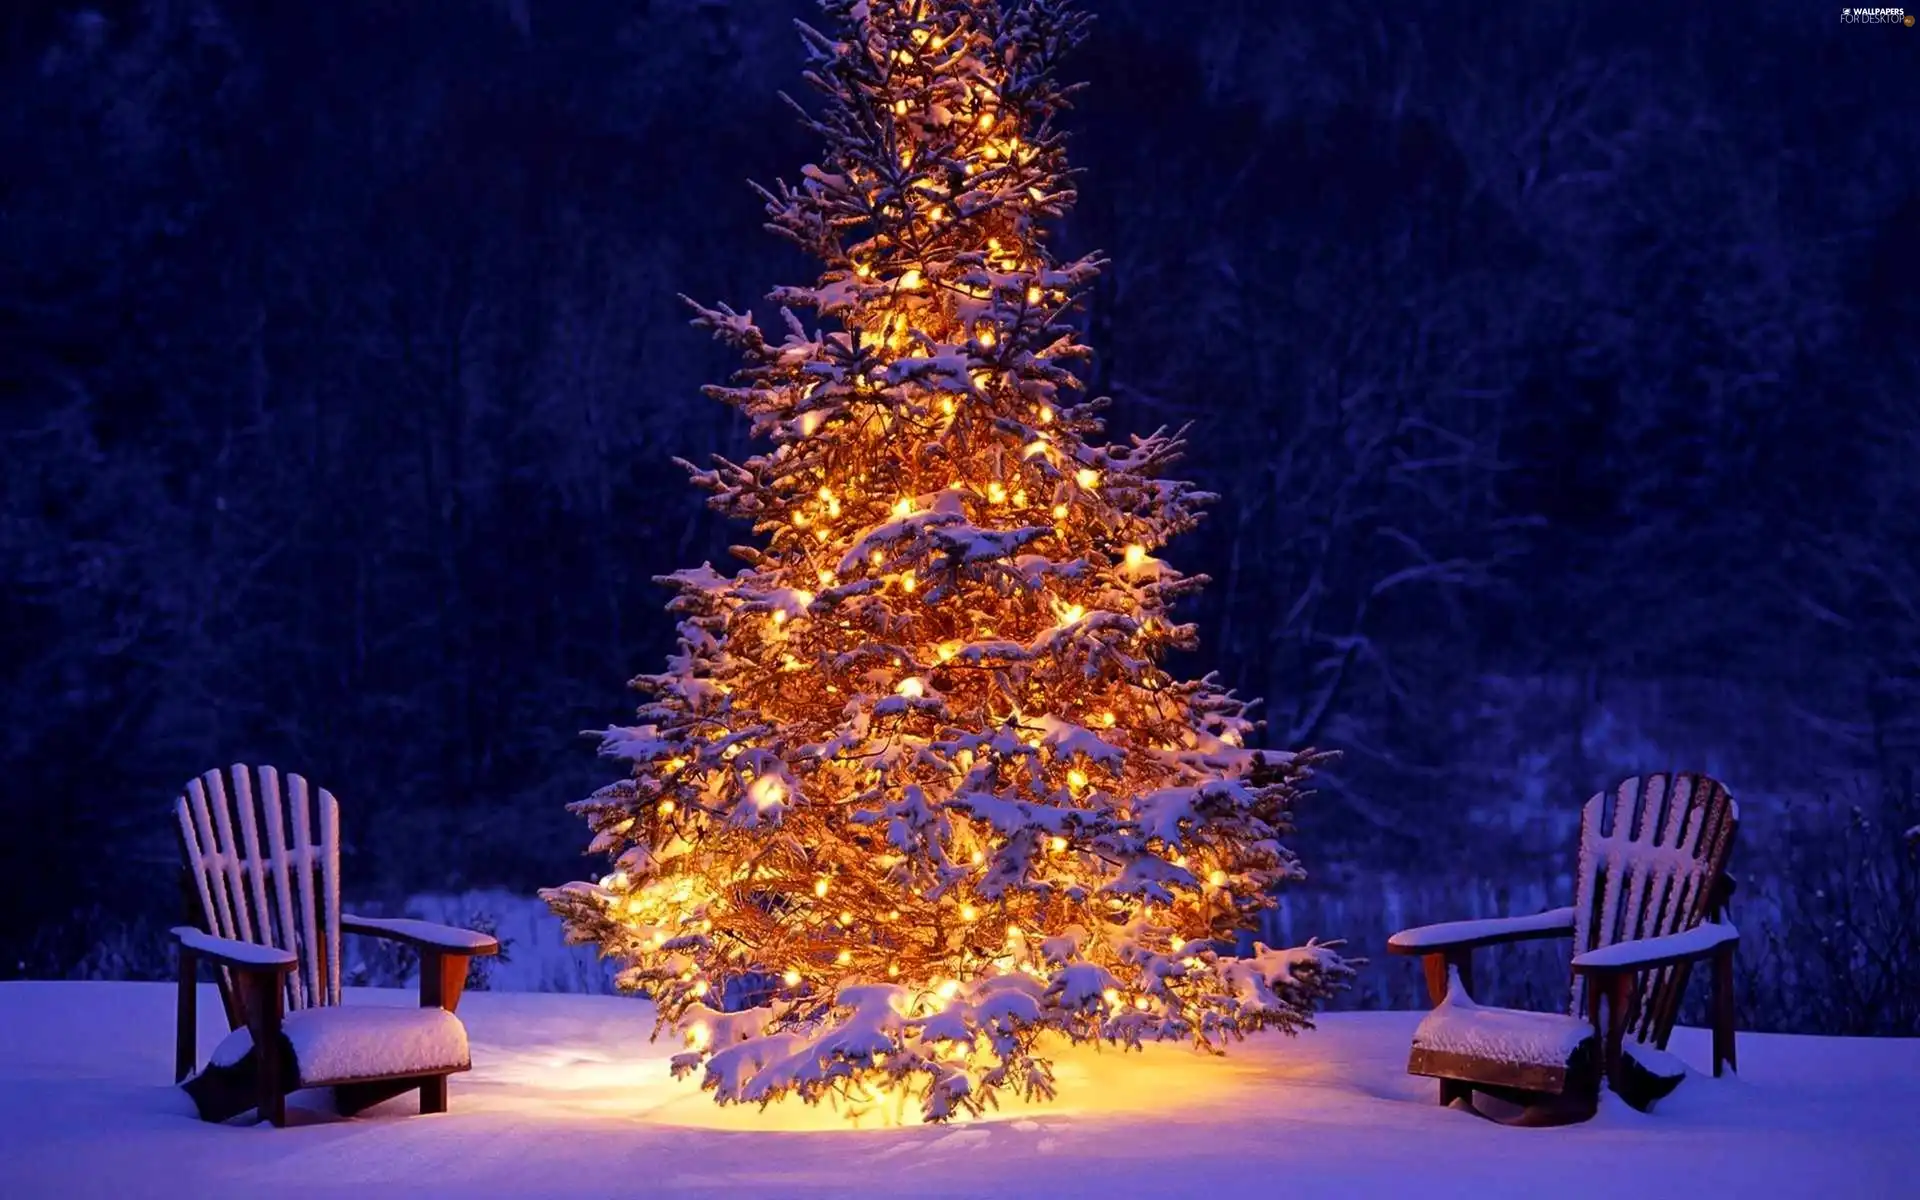 snow, winter, christmas tree, seats, illuminated